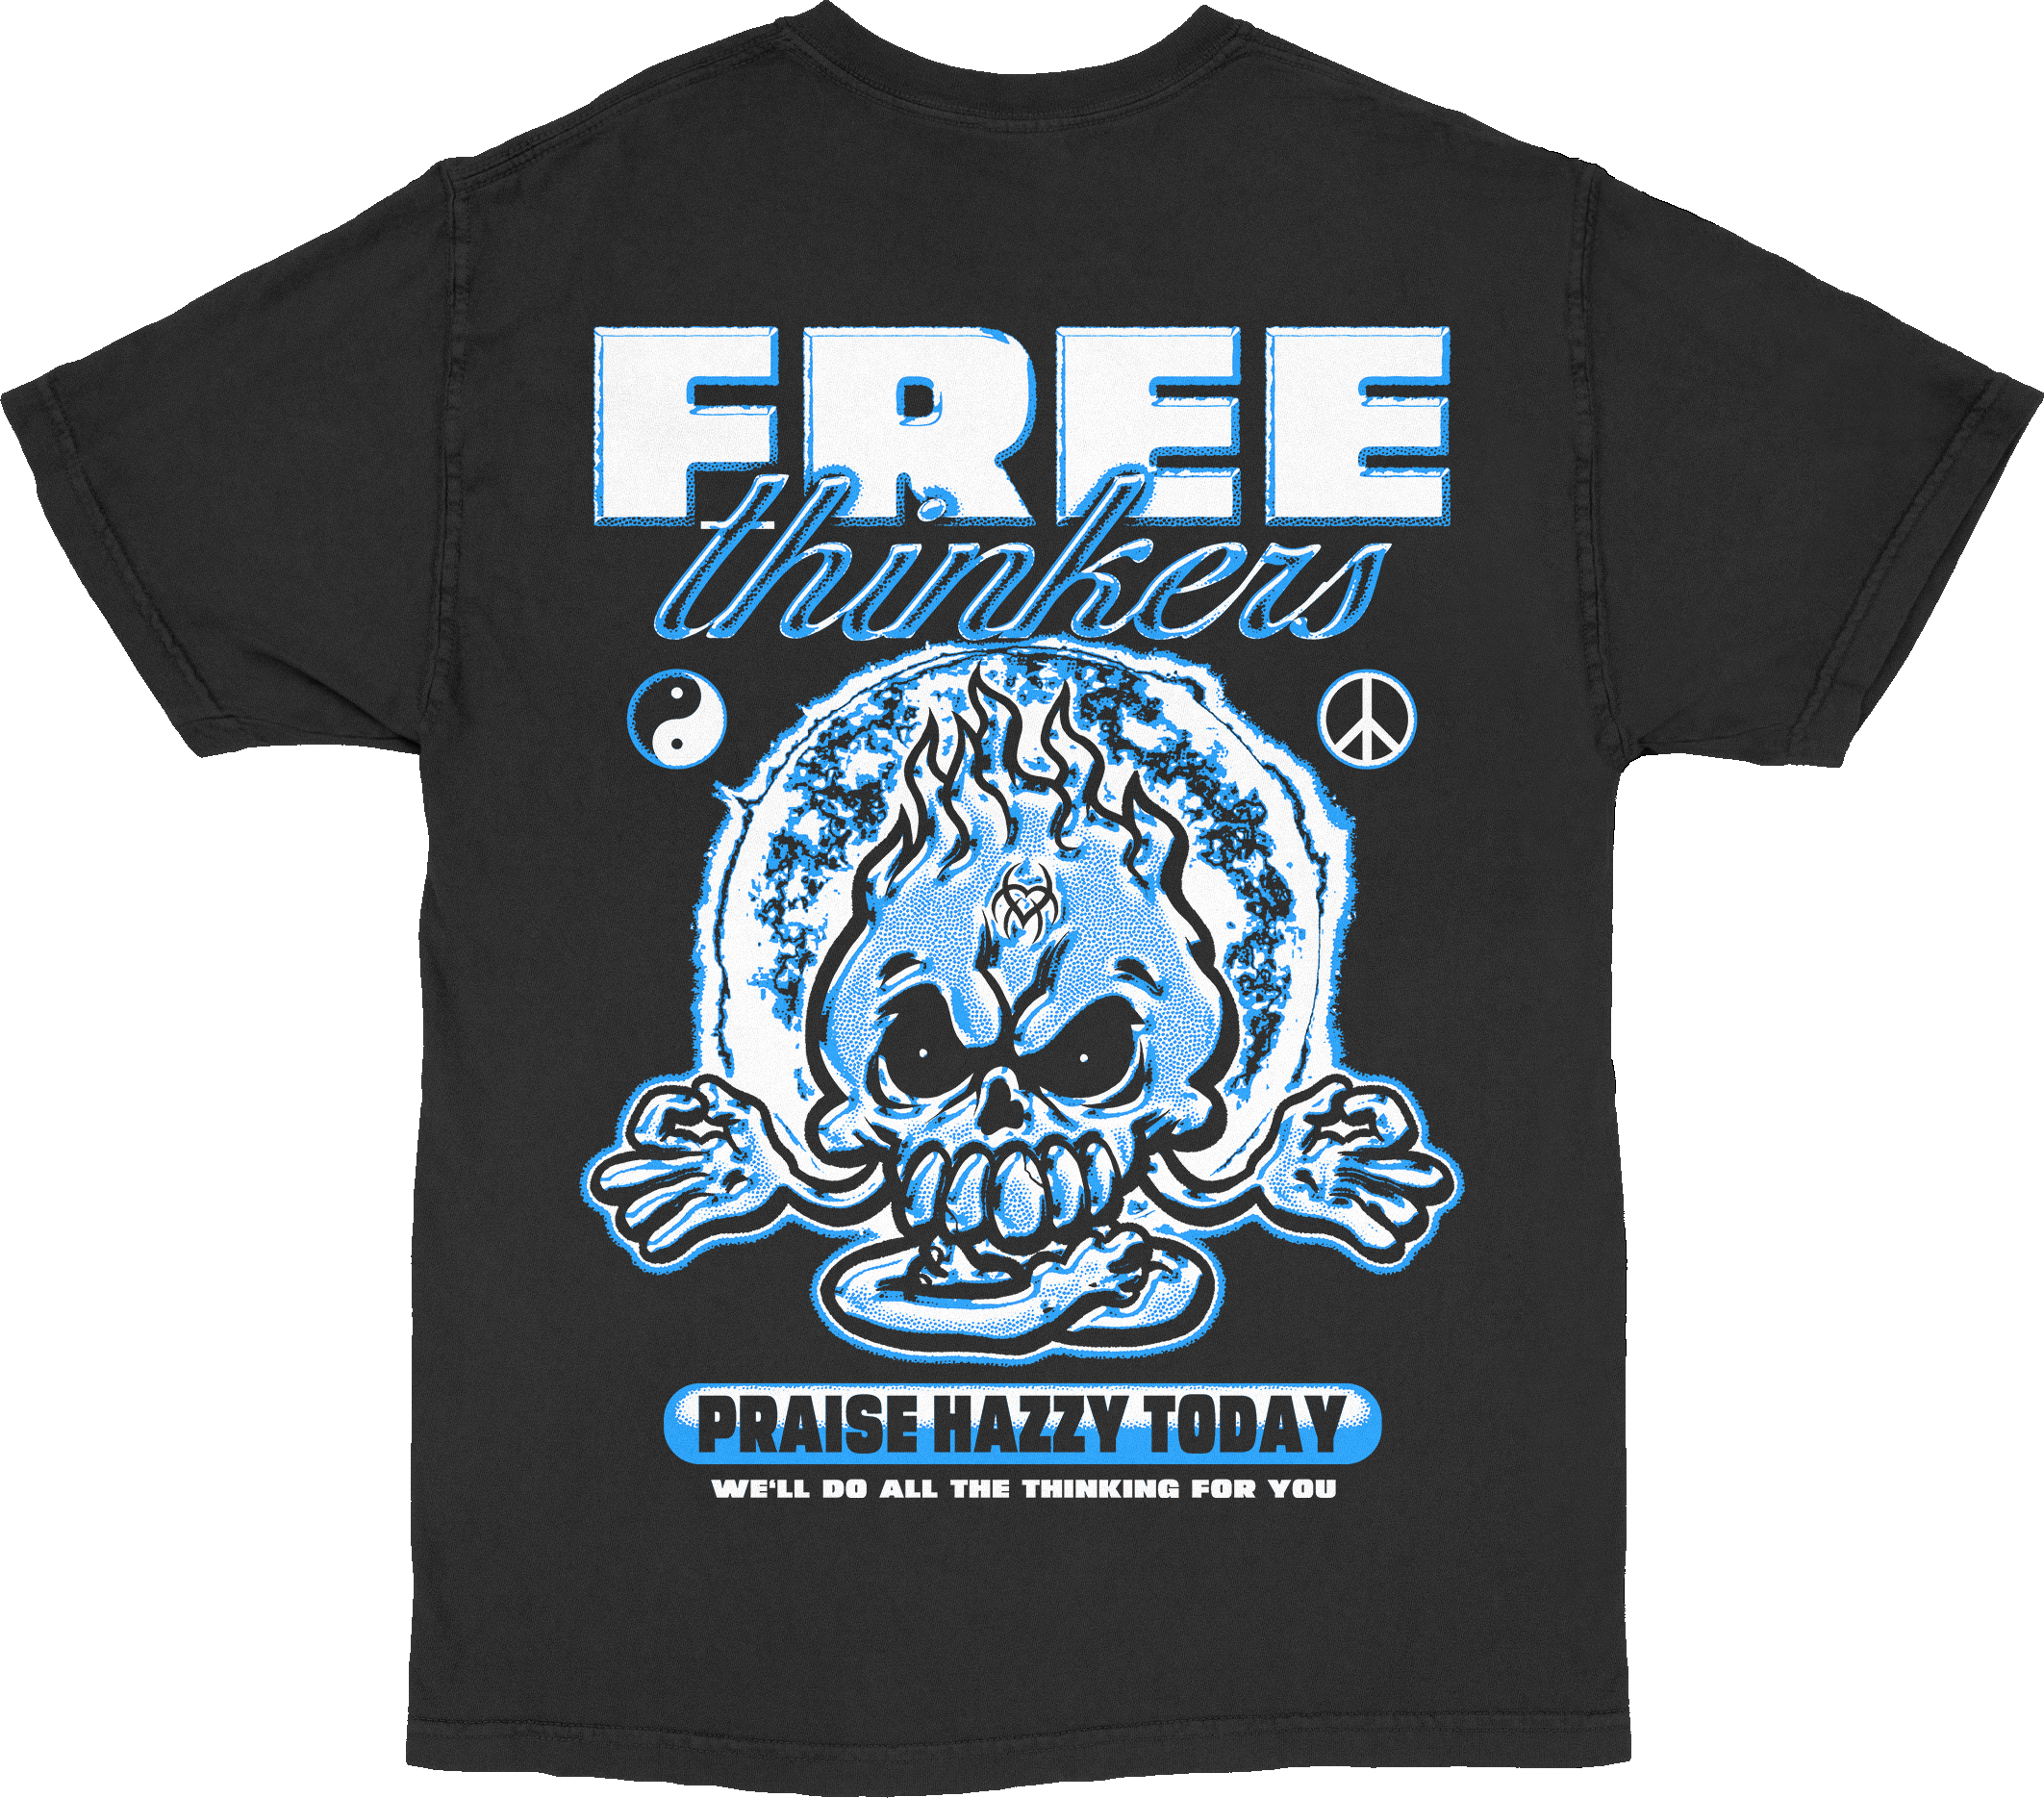 Free Thinkers - Shirt